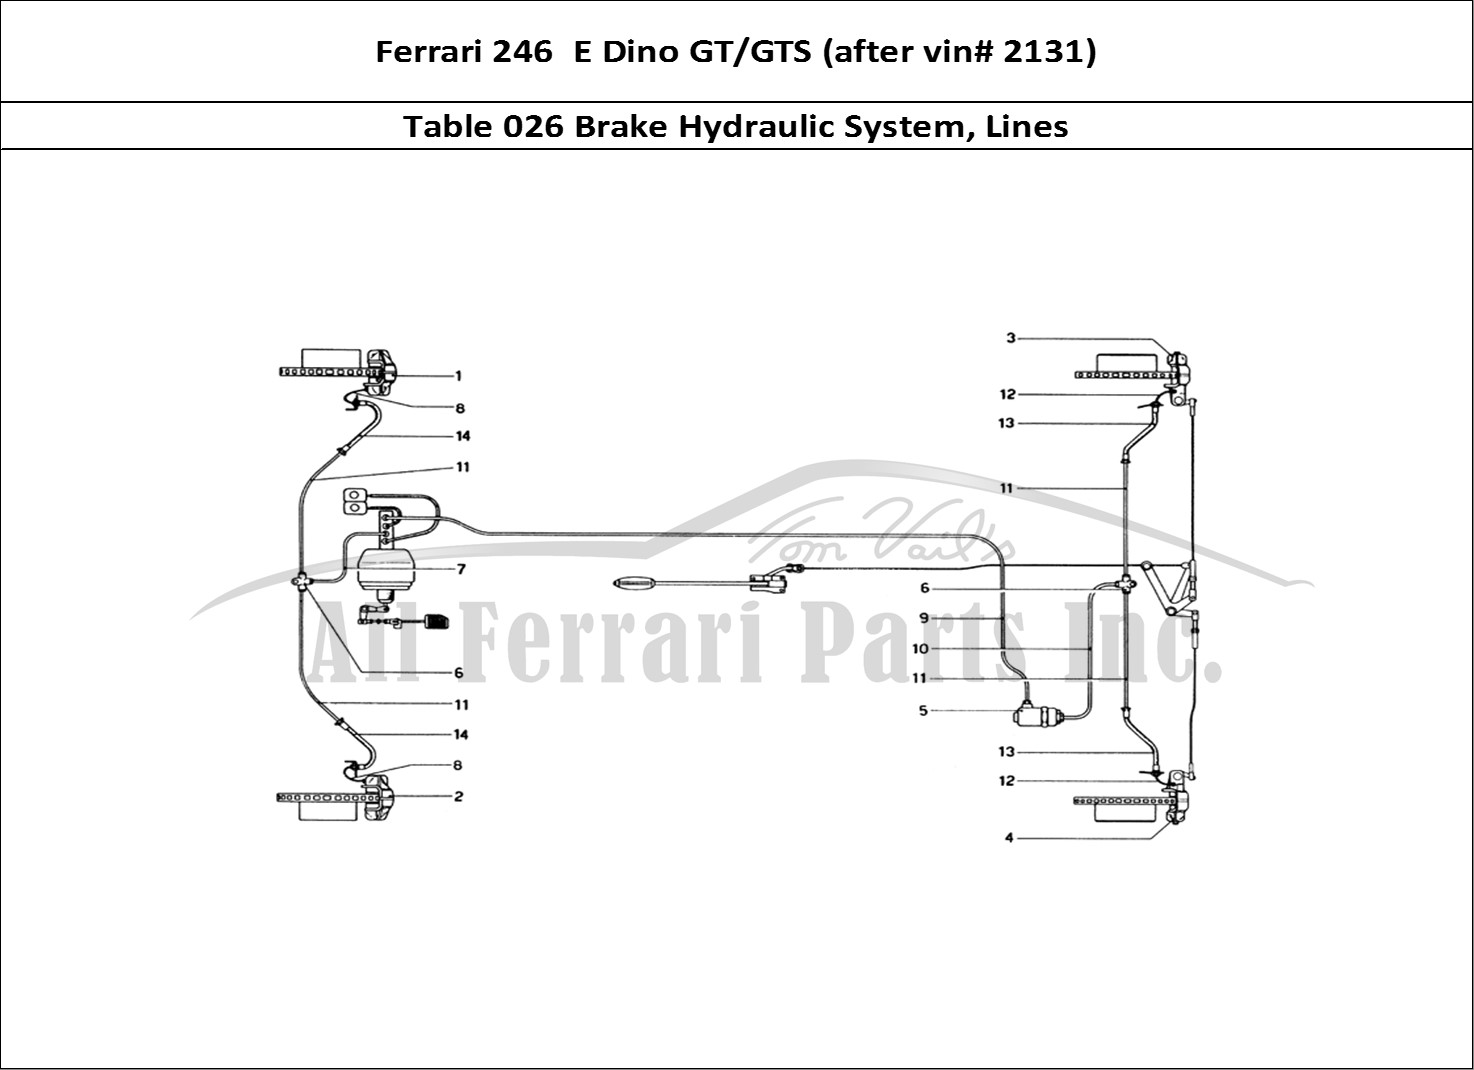 Ferrari Parts Ferrari 246 Dino (1975) Page 026 Brake Hydraulic System On